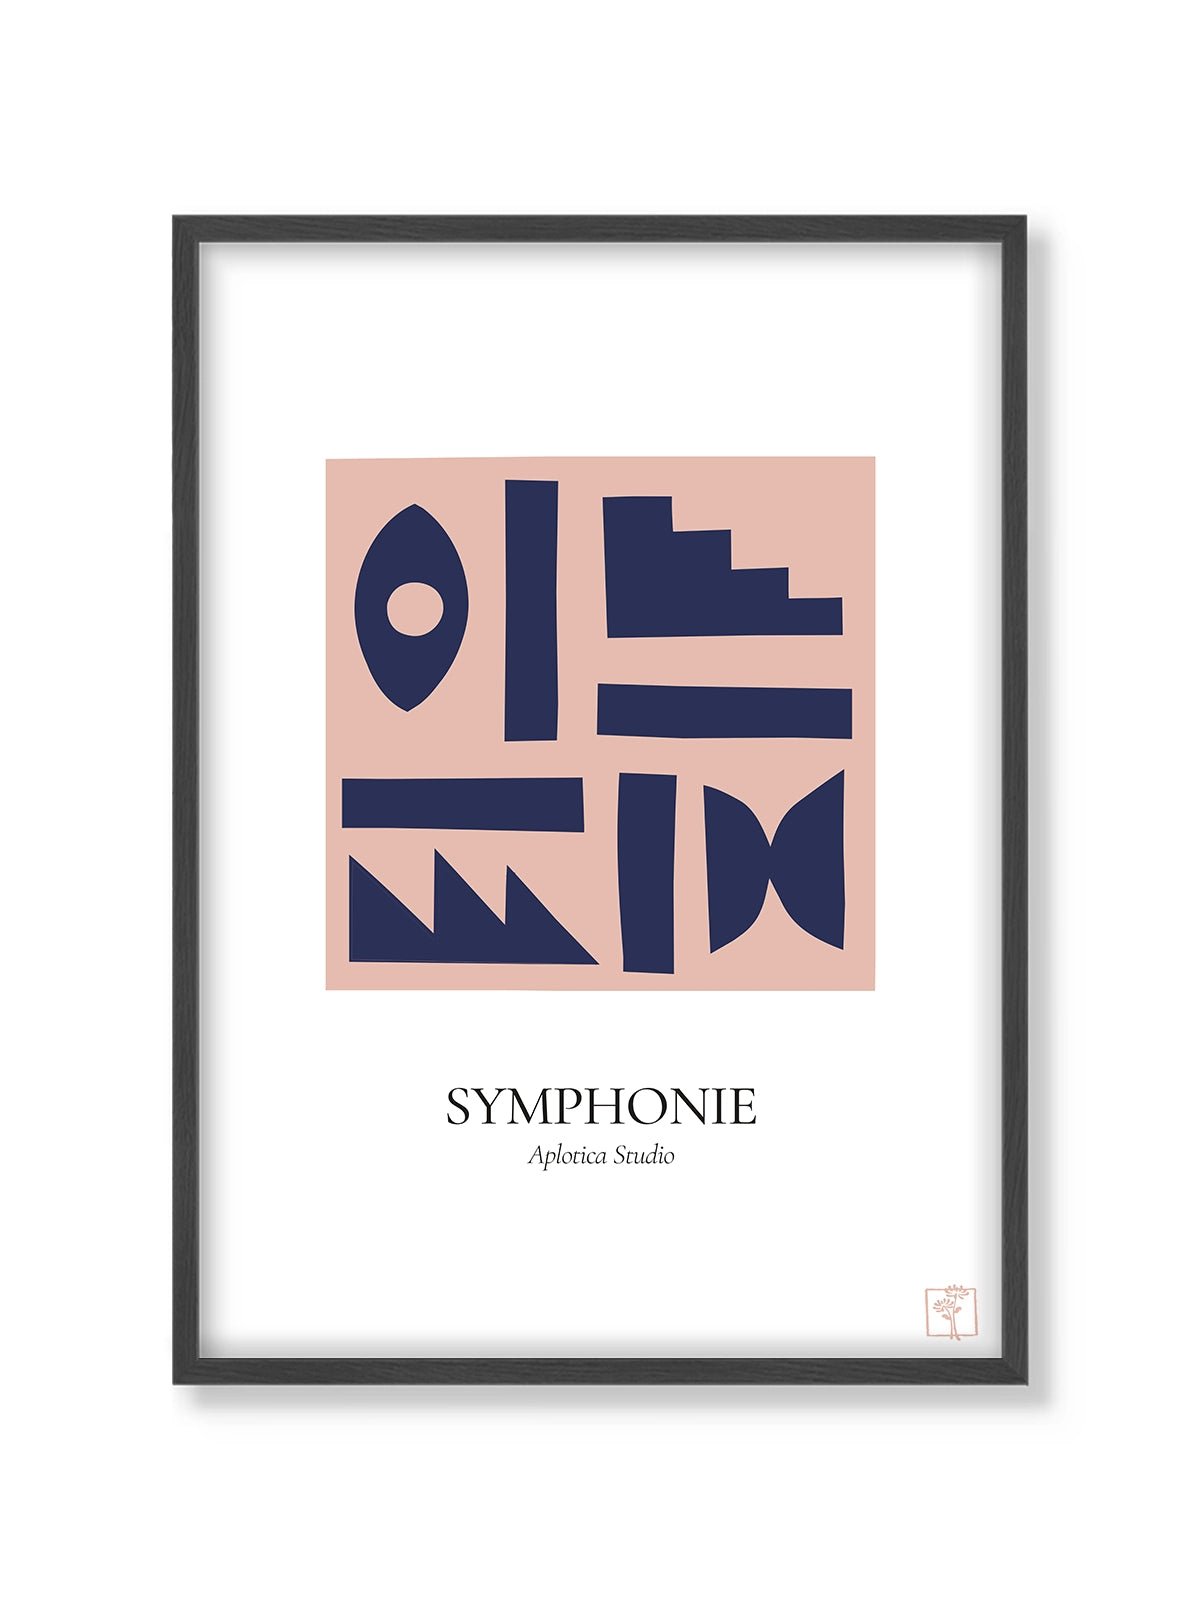 Symphonie - Una Lámina de Aplotica Studio - Decora tu casa en Nomadart